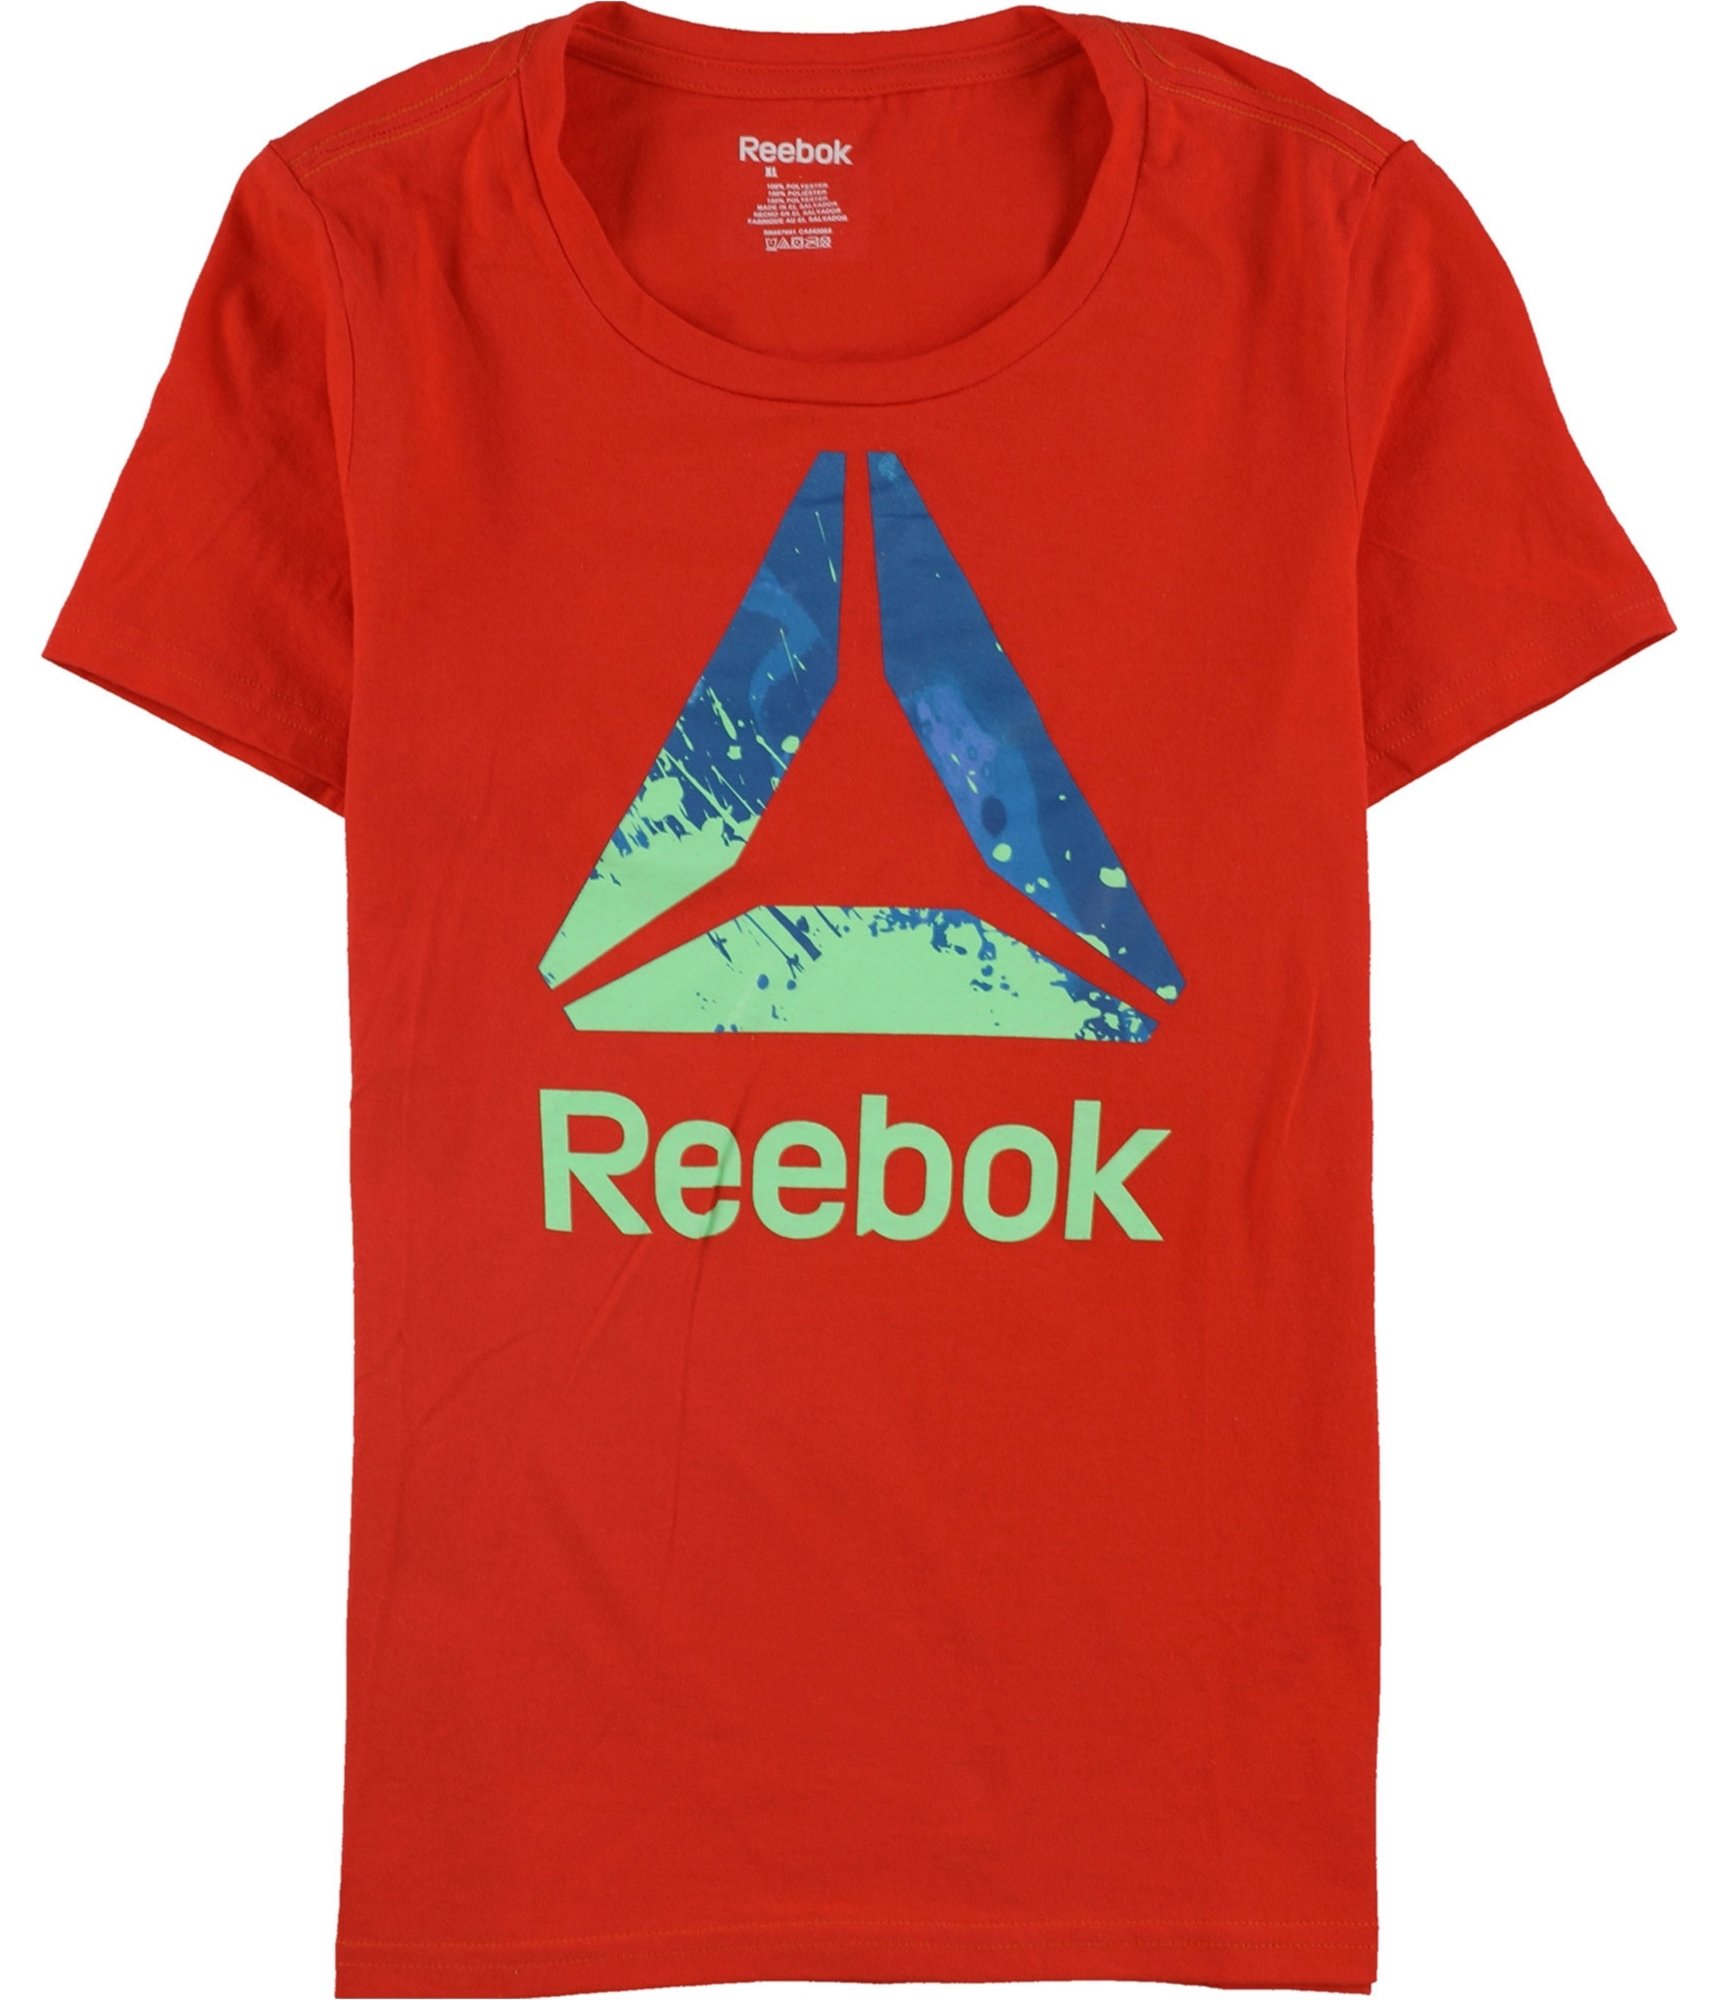 Buy a Reebok Graphic T-Shirt Online |